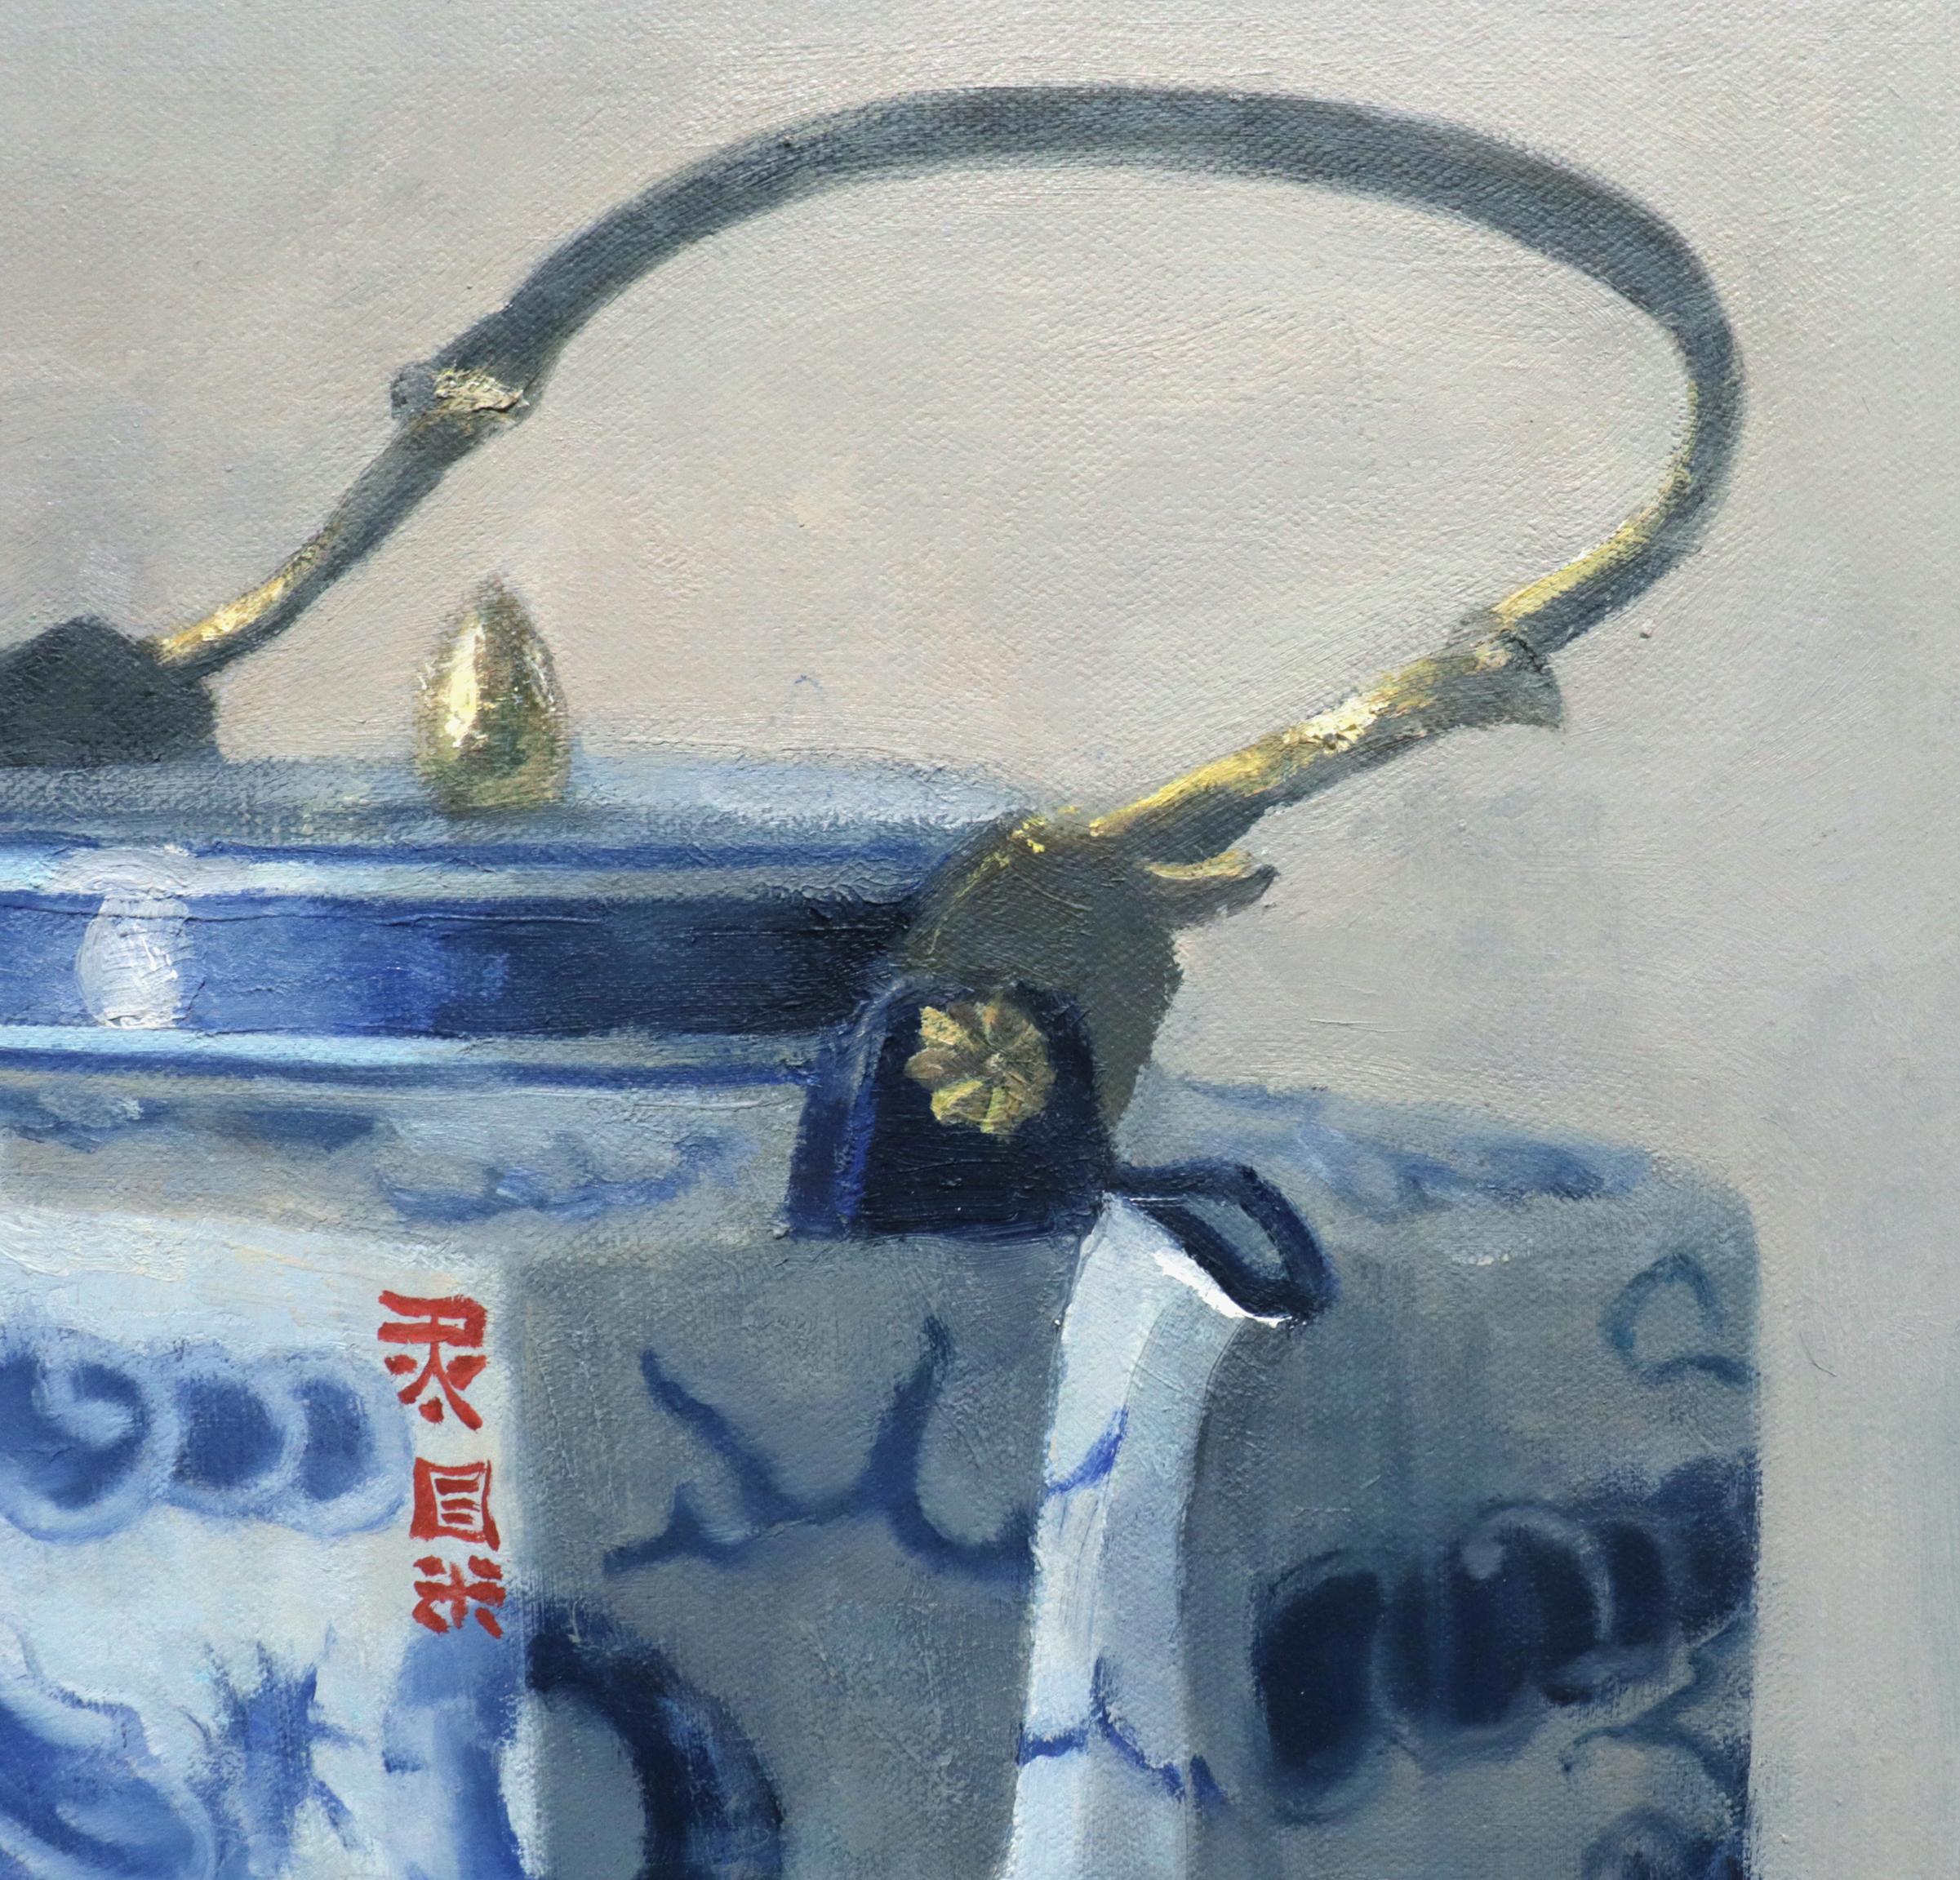 blue and white china teapot